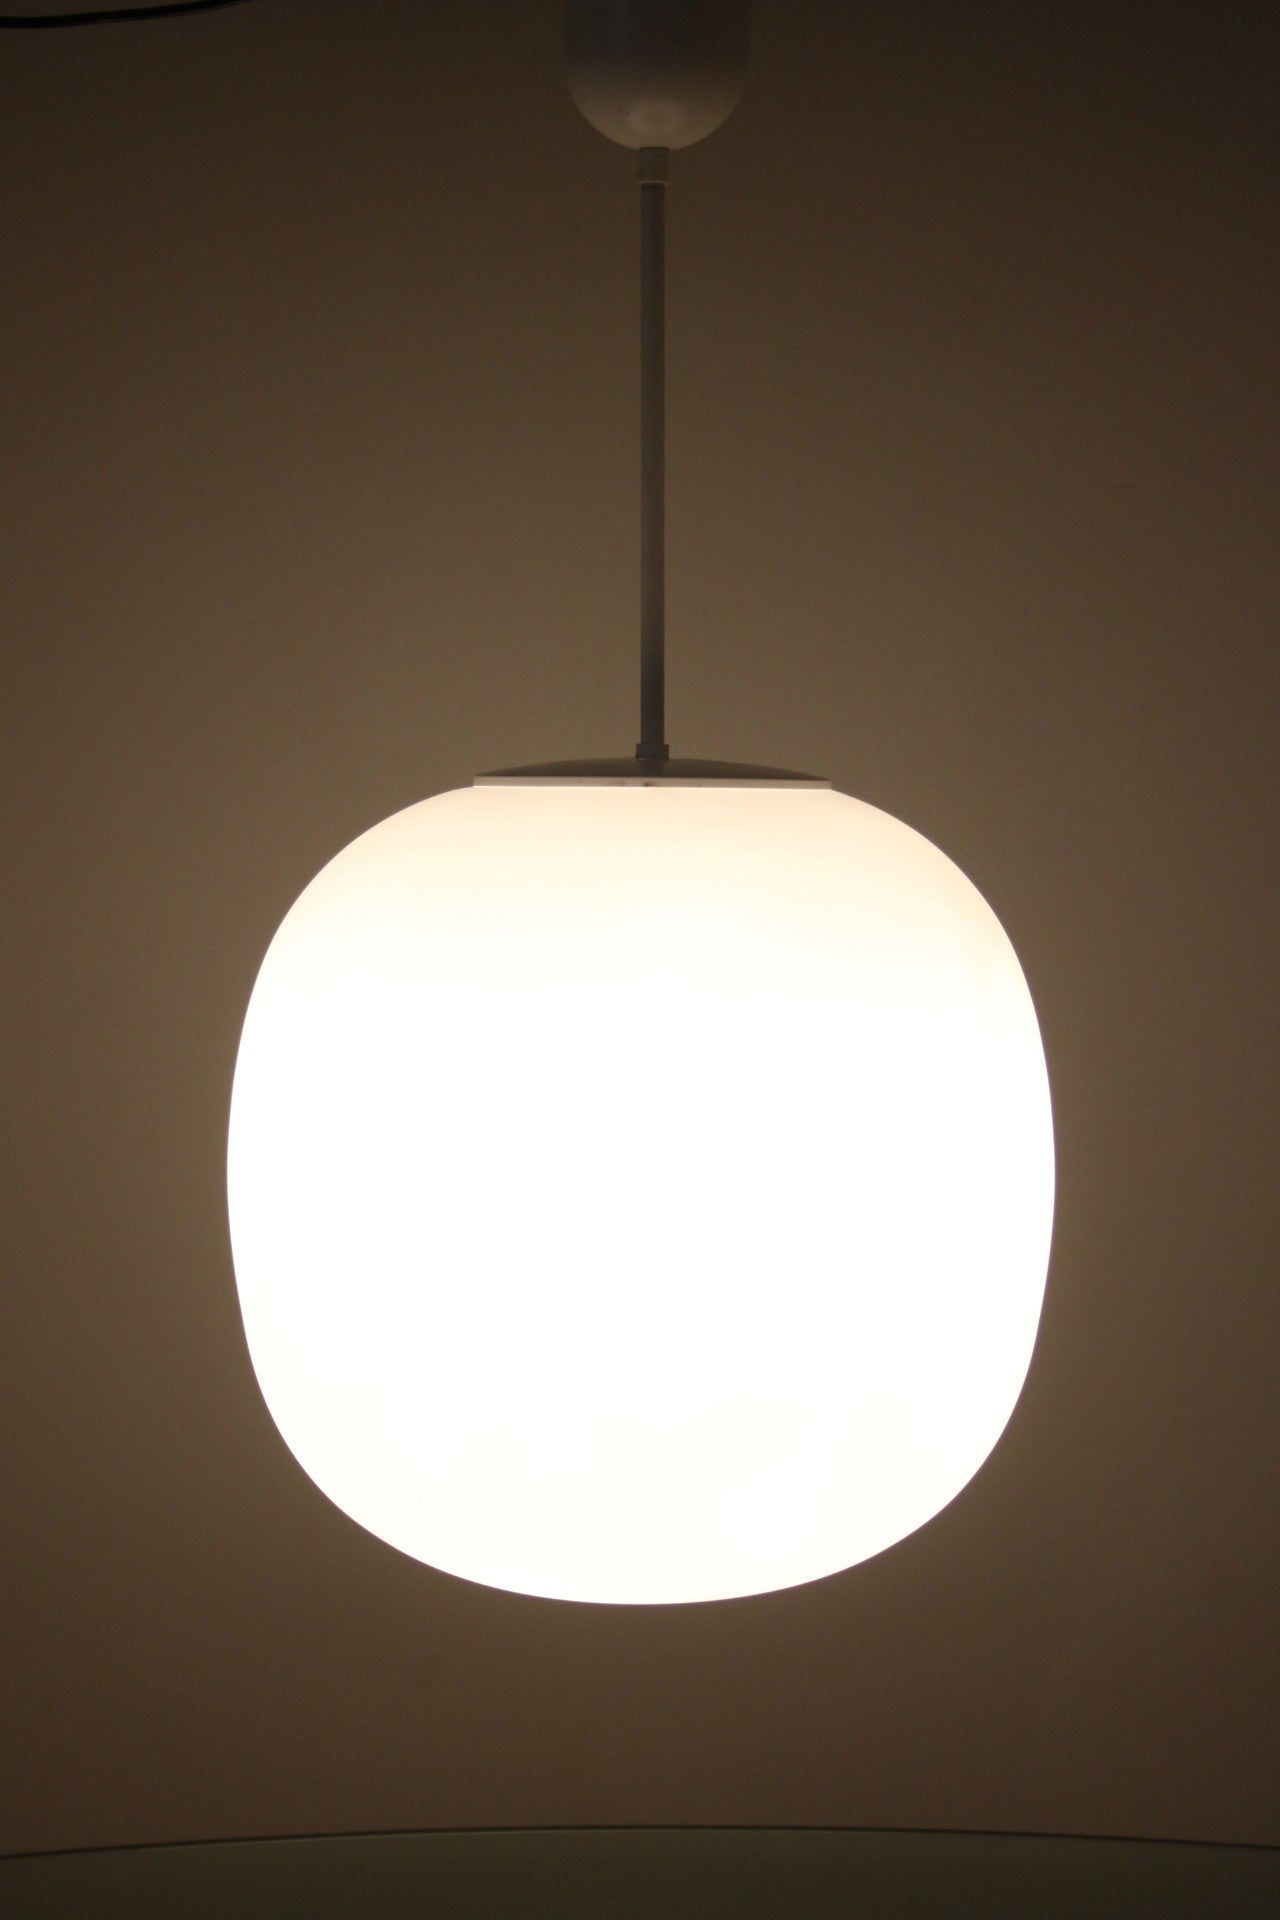 Zeer Grote Witte Glazen Bol lamp Glashutte Limburg 1960 voorkant licht aan